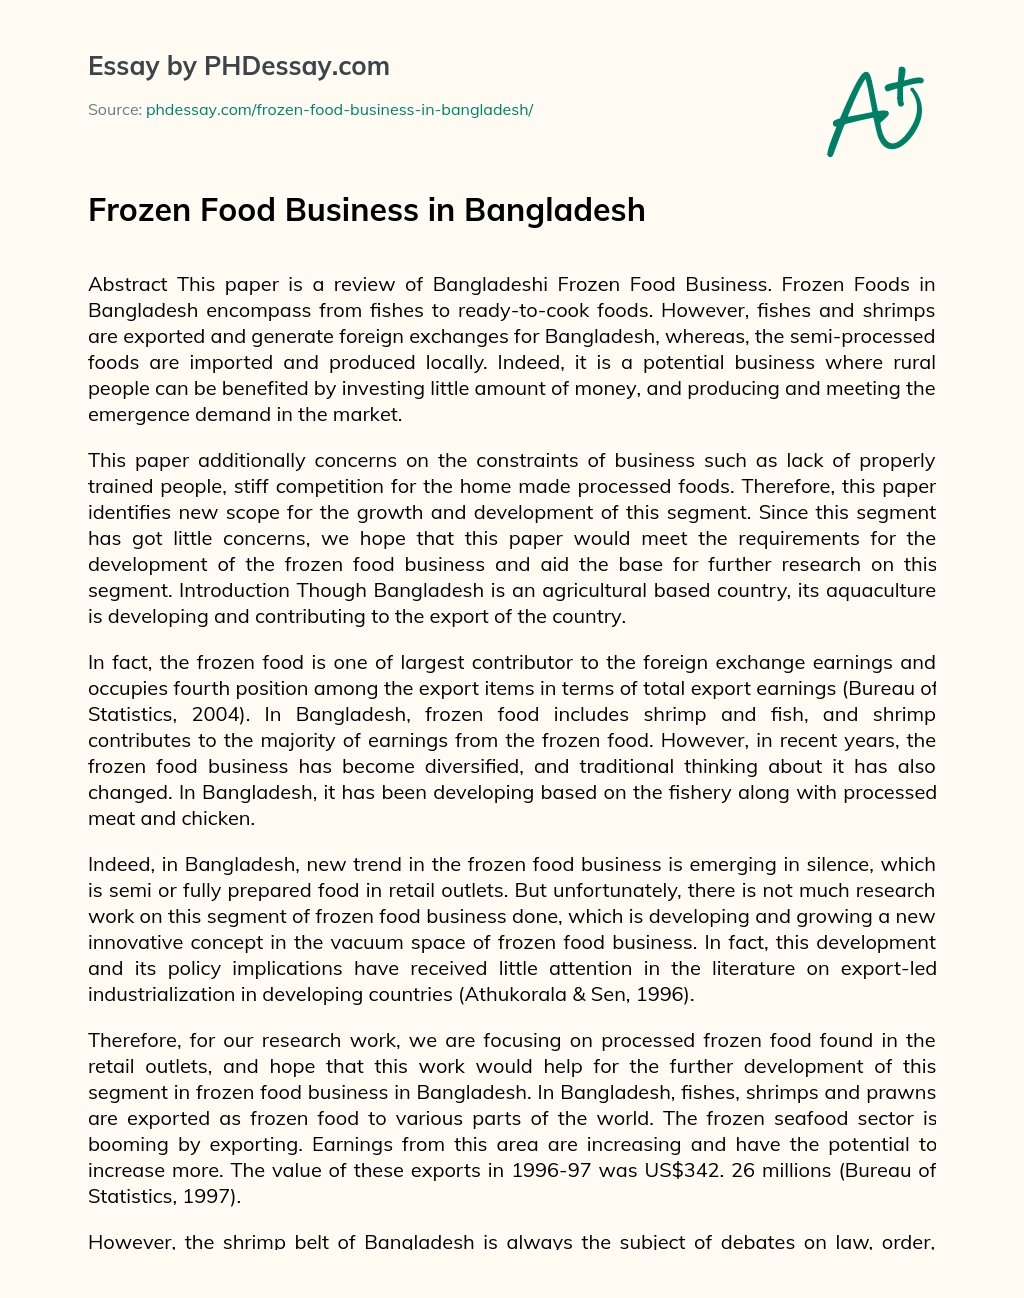 Frozen Food Business in Bangladesh essay